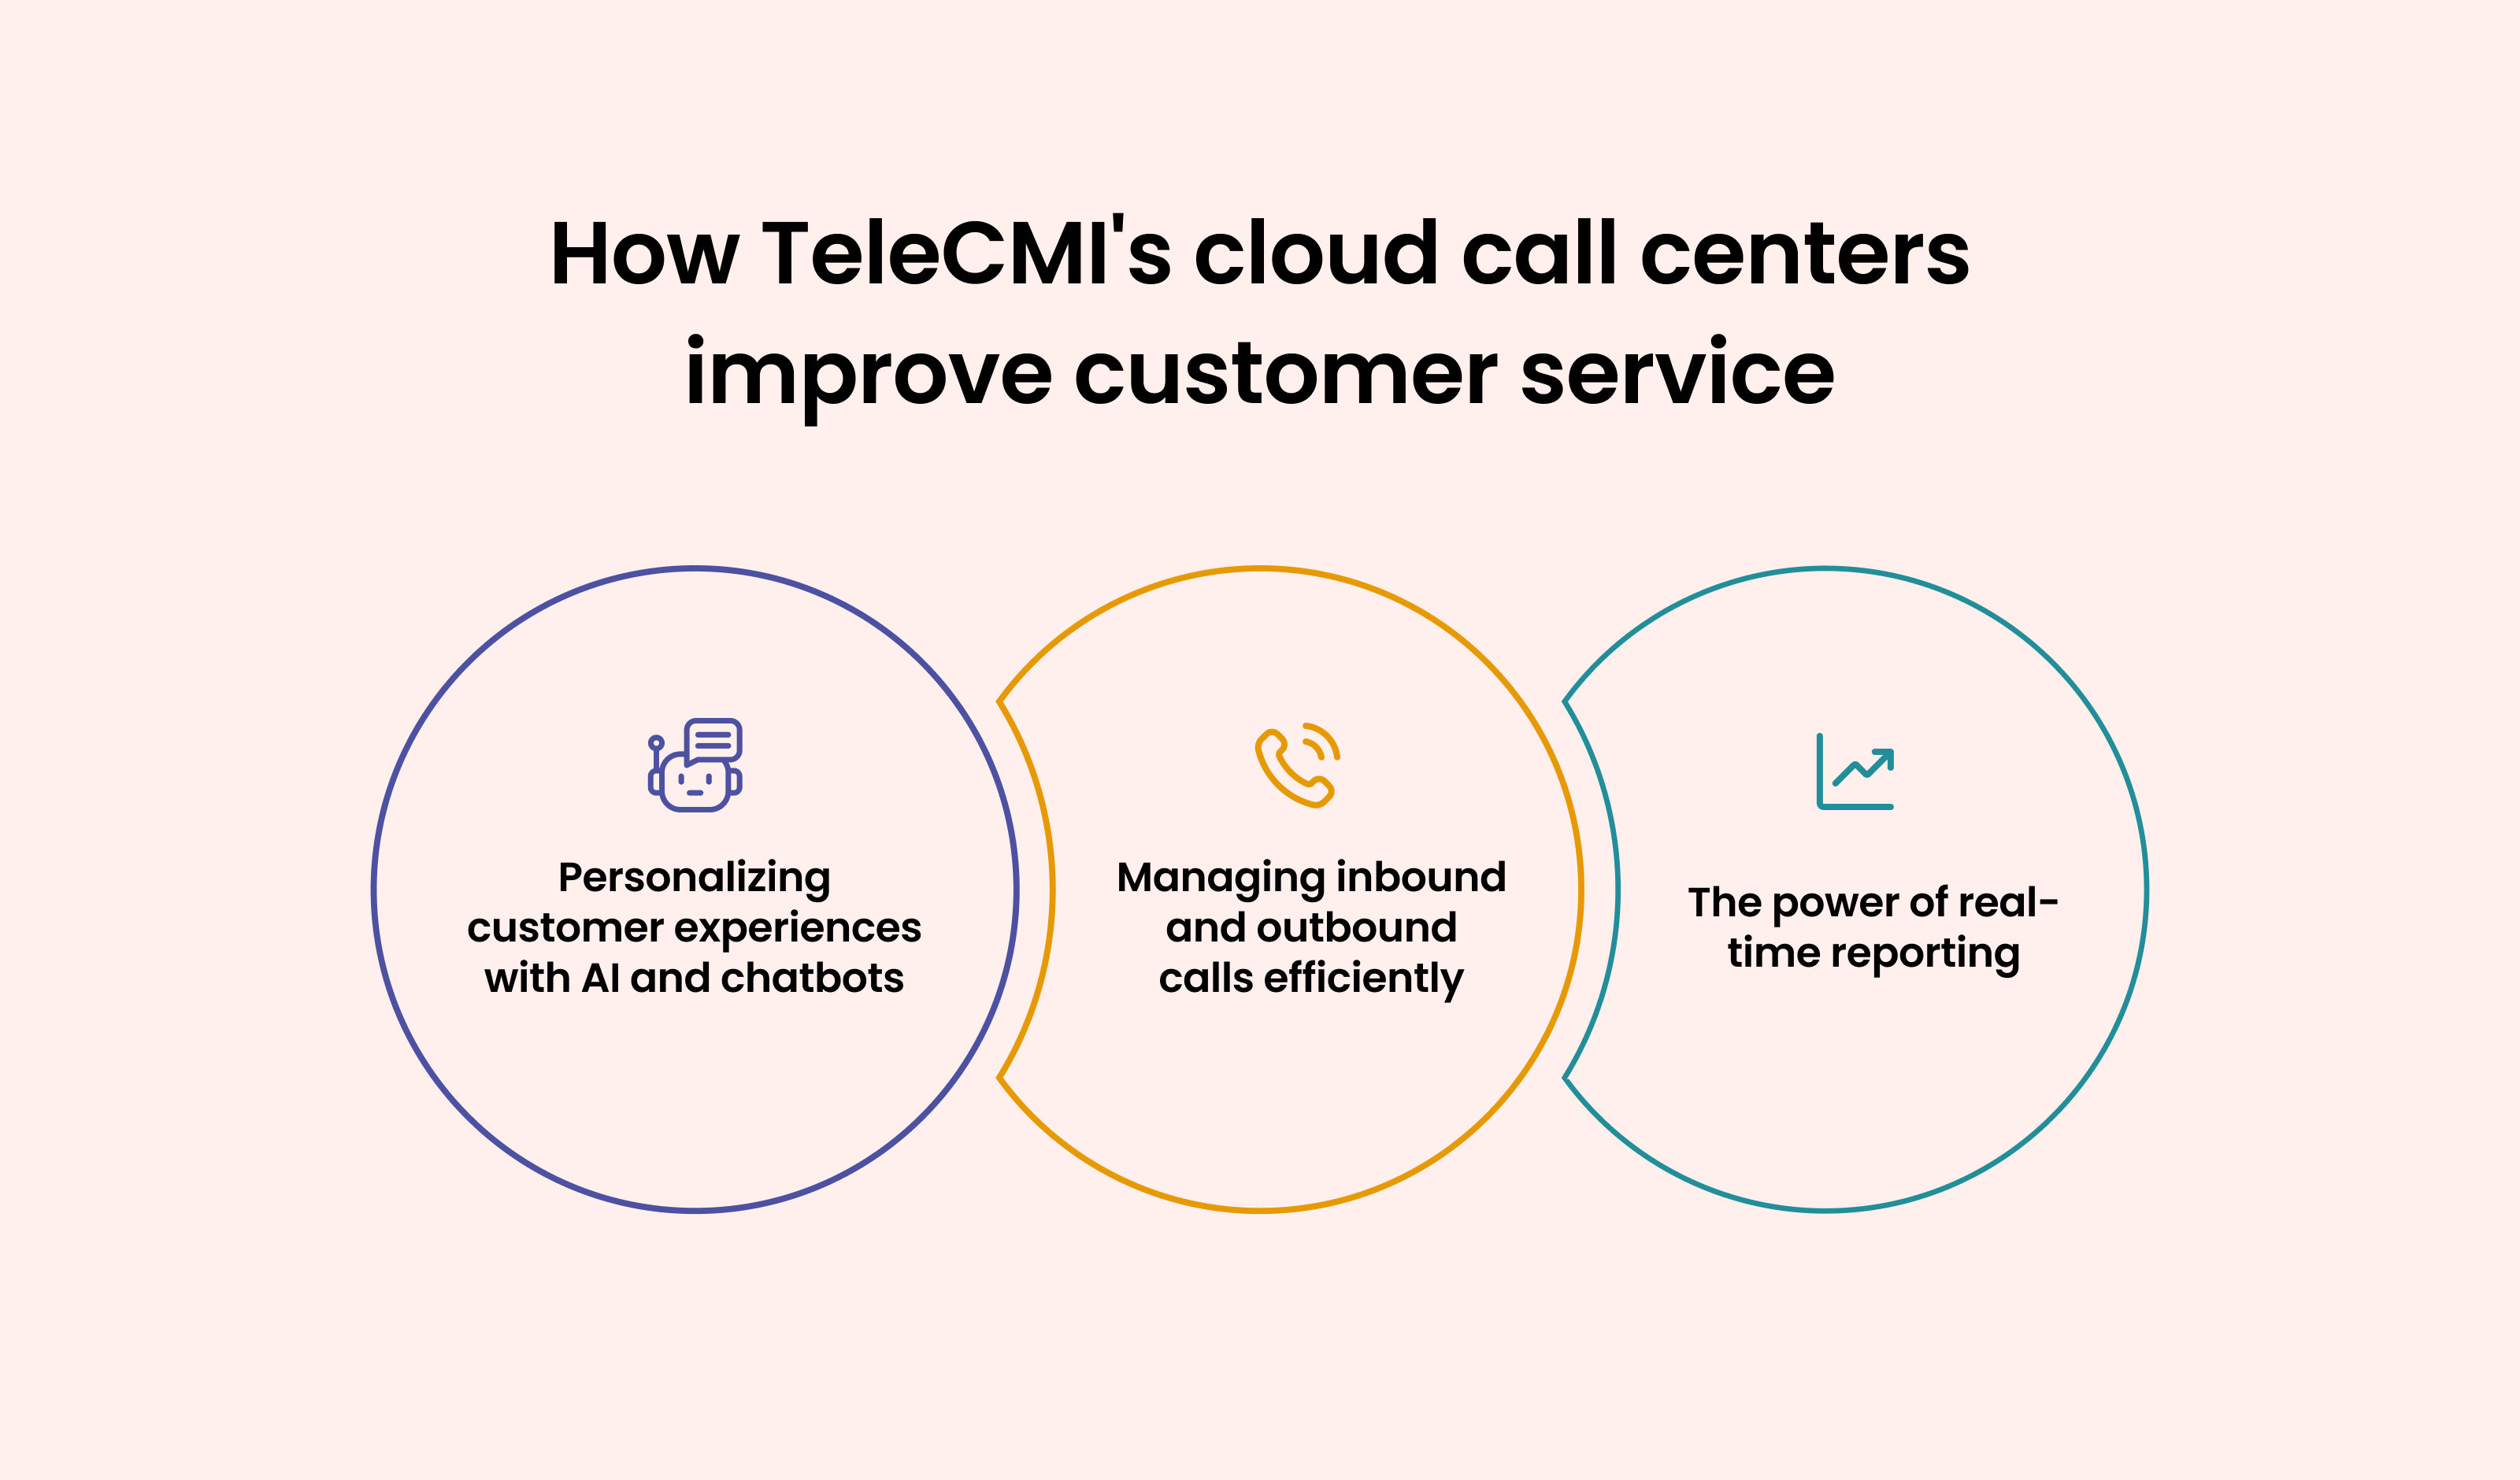 How TeleCMI's Cloud Call Centers Improve Customer Service: